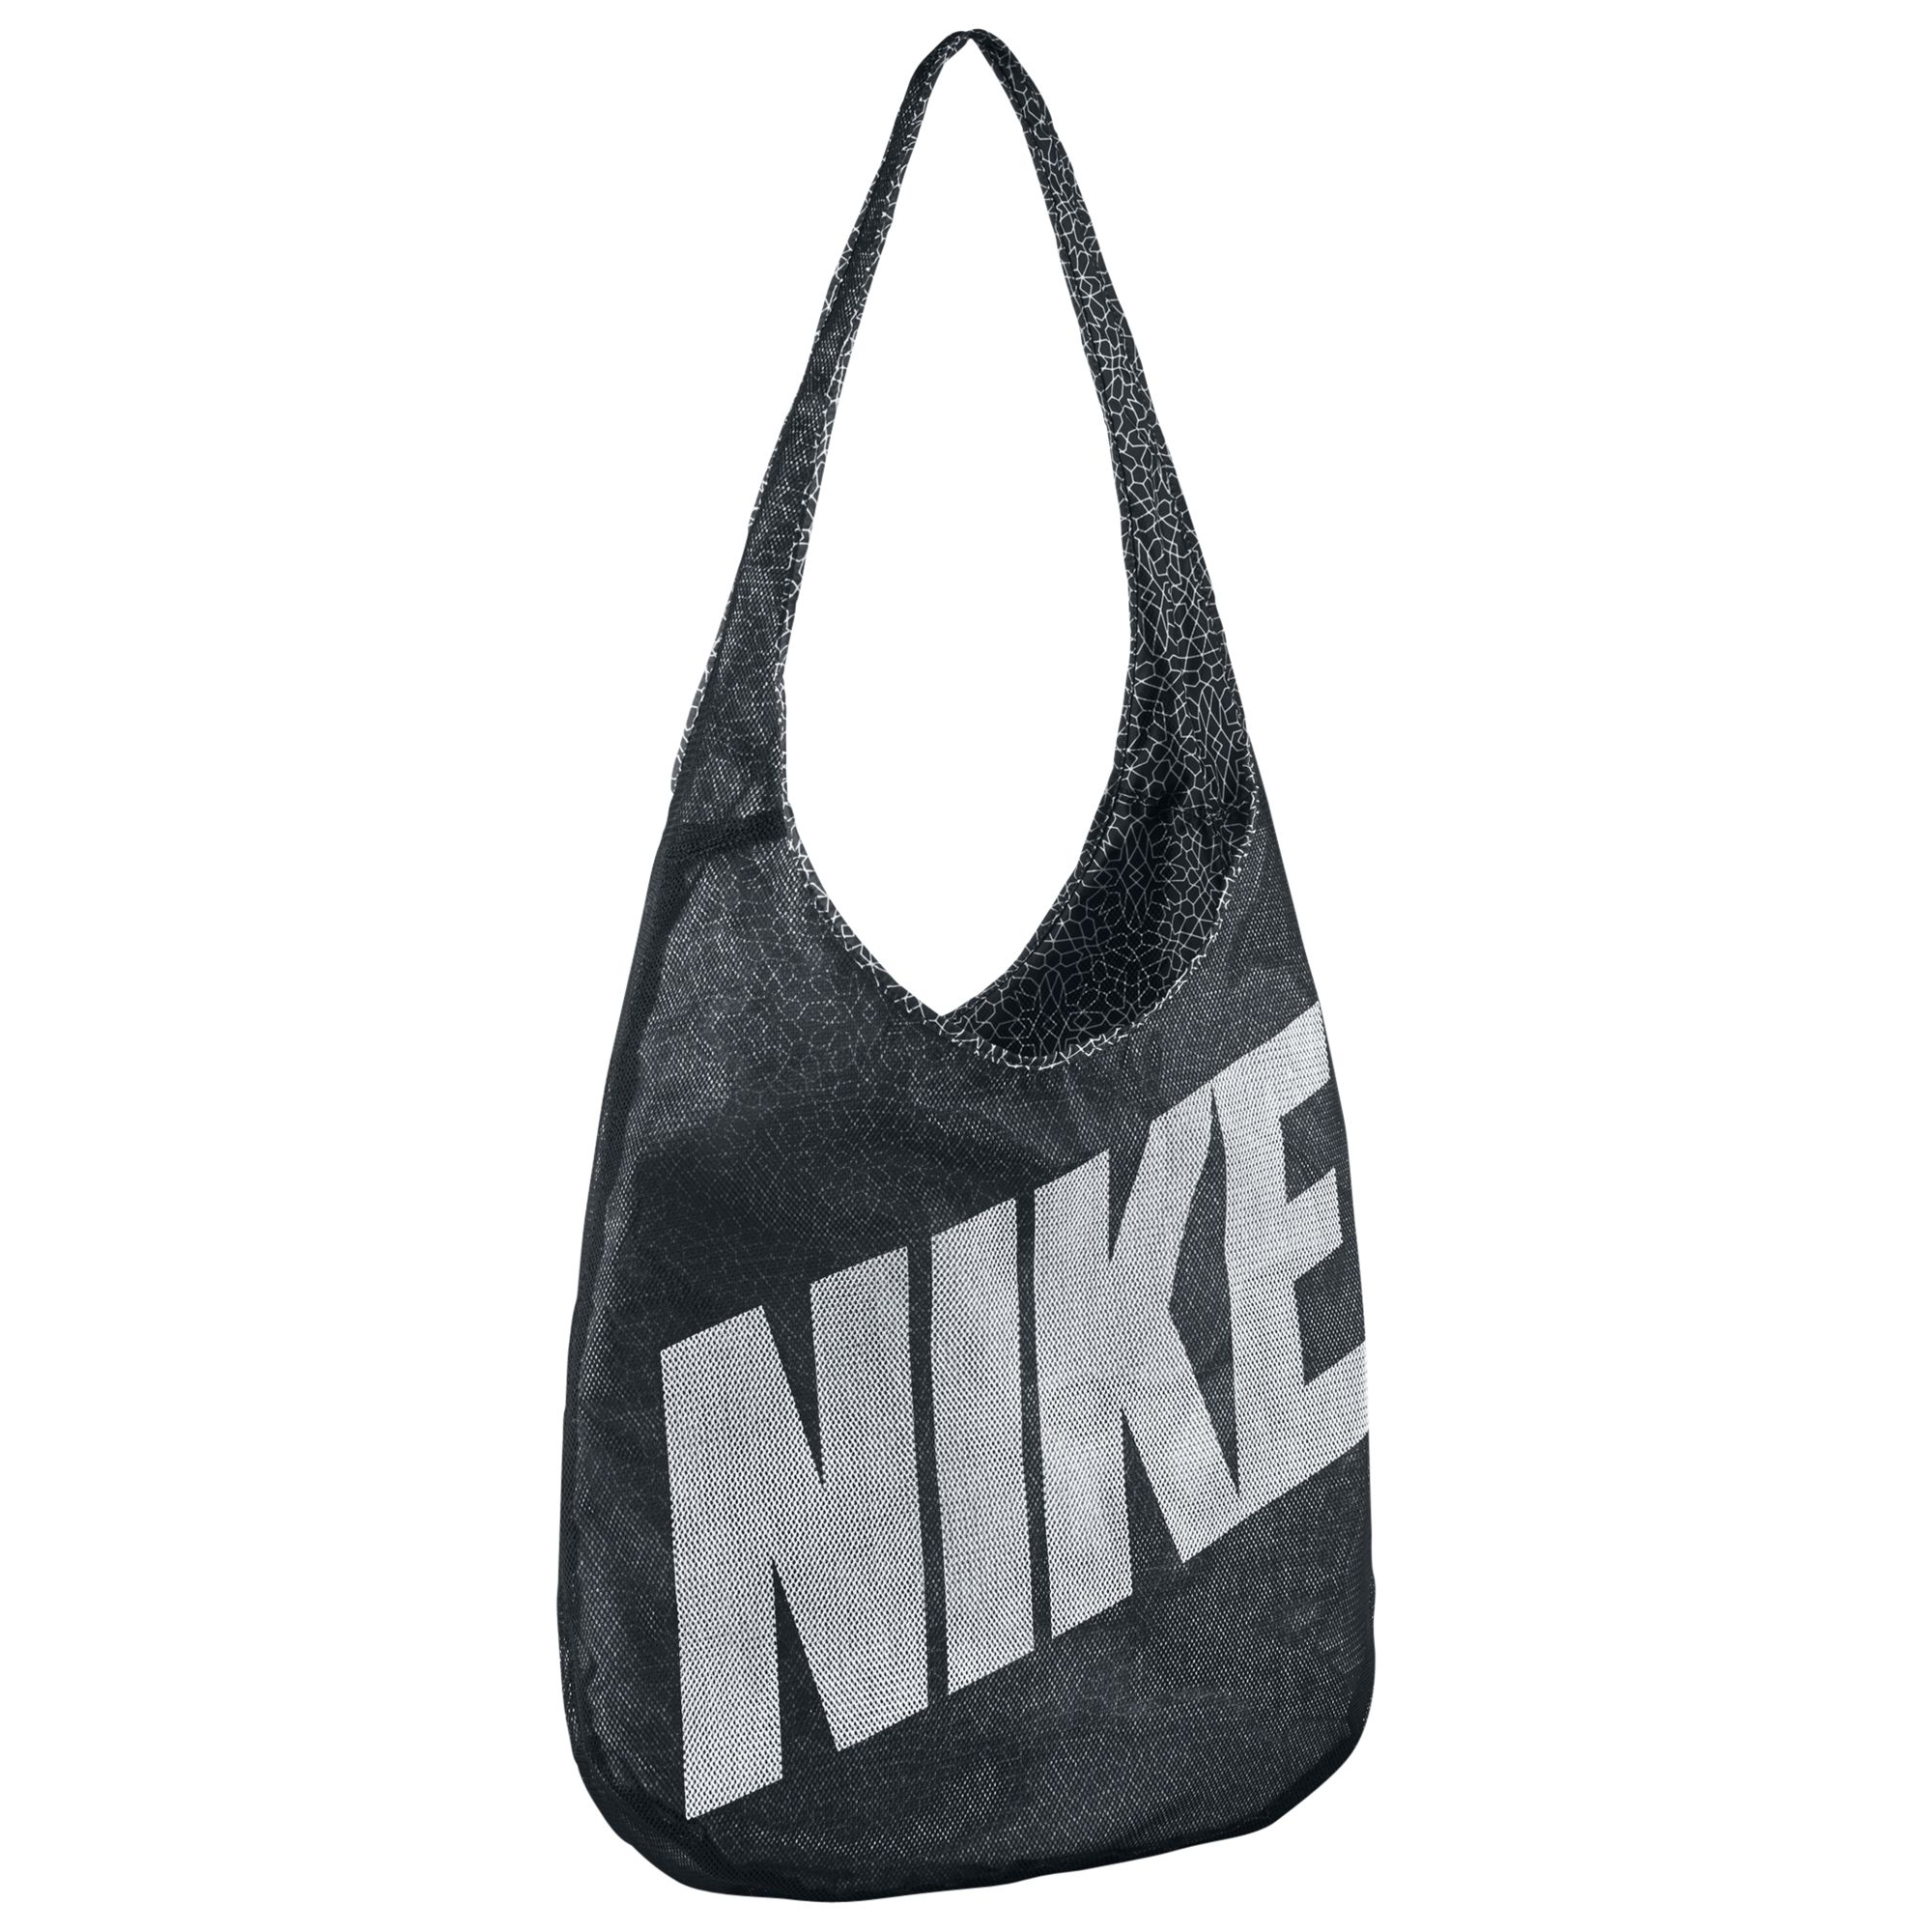 Nike Reversible Tote Bag, Black/White 